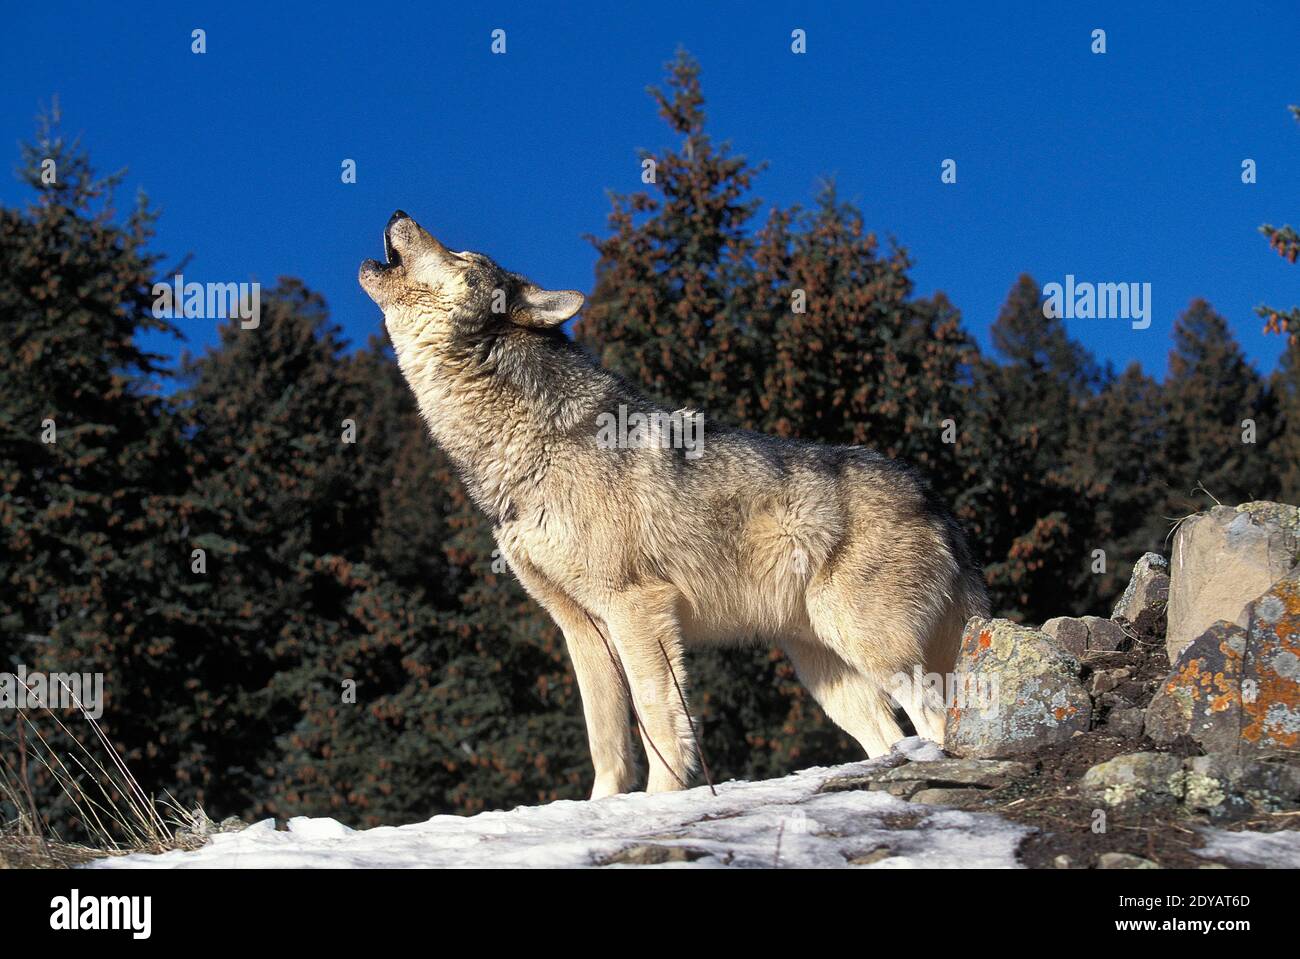 Lupo europeo, lupo canis, agnello per adulti Foto Stock